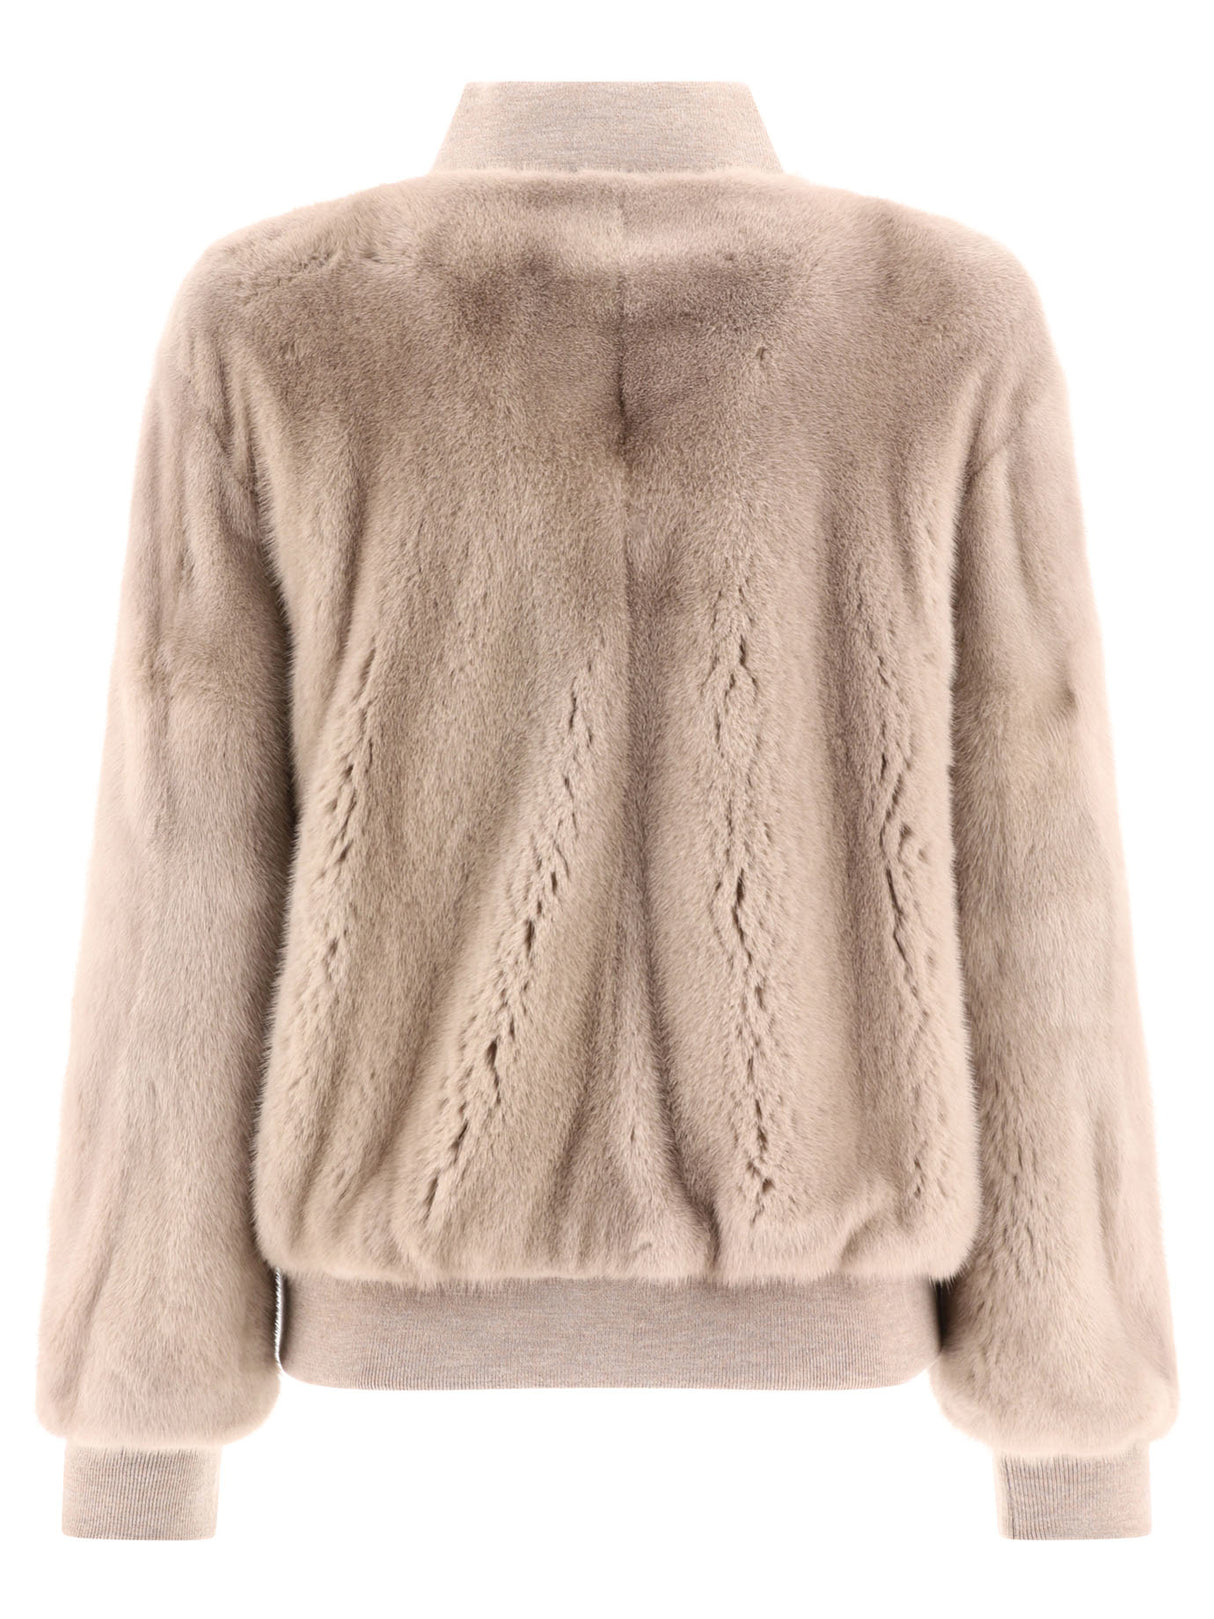 GIOVI Beige Mink Fur Bomber Jacket for Women - FW23 Collection